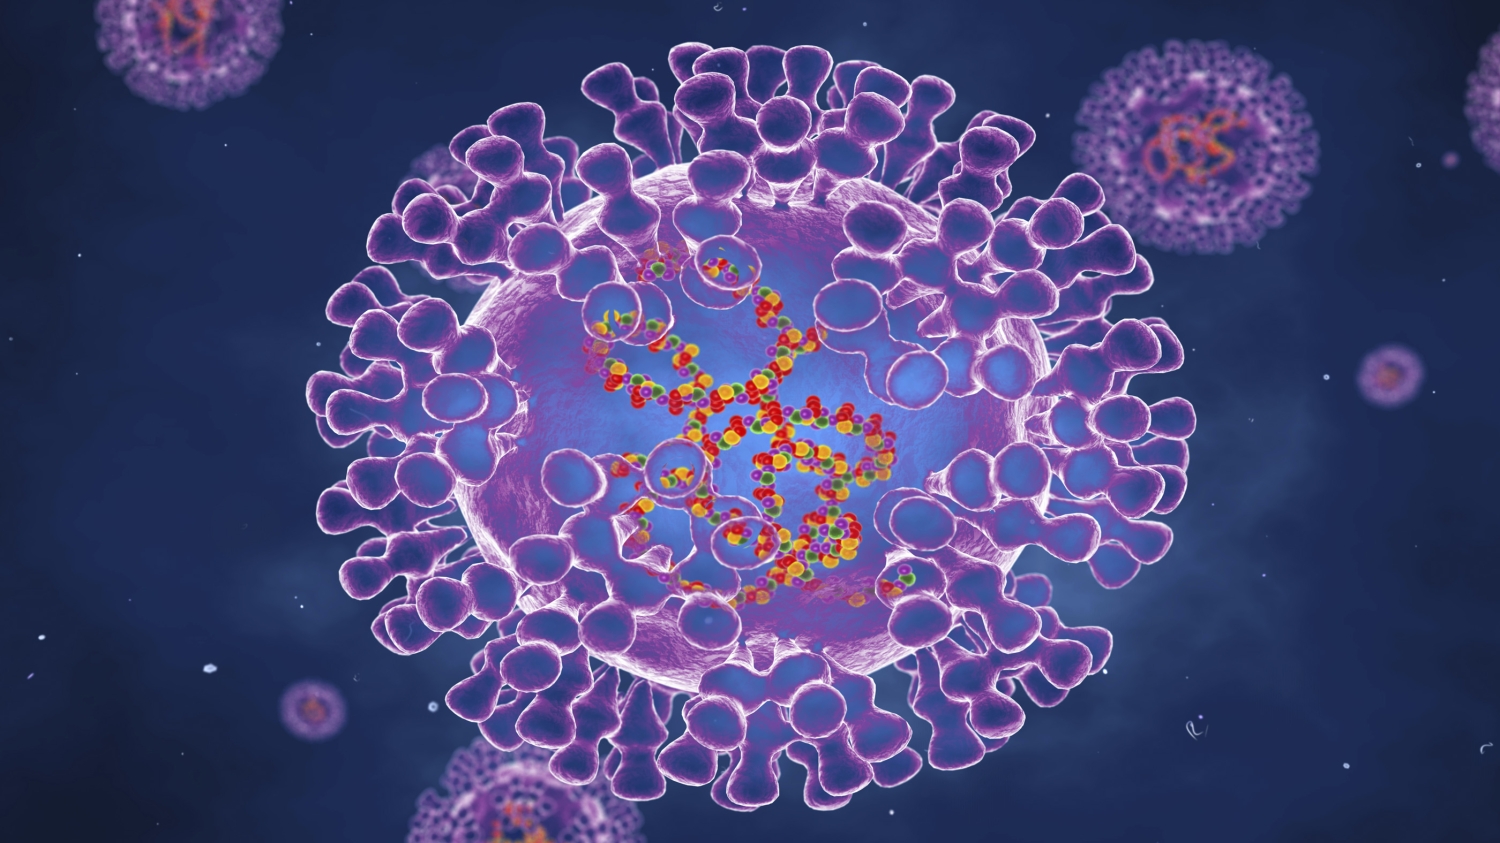 monkeypox virus outbreak - photo #12